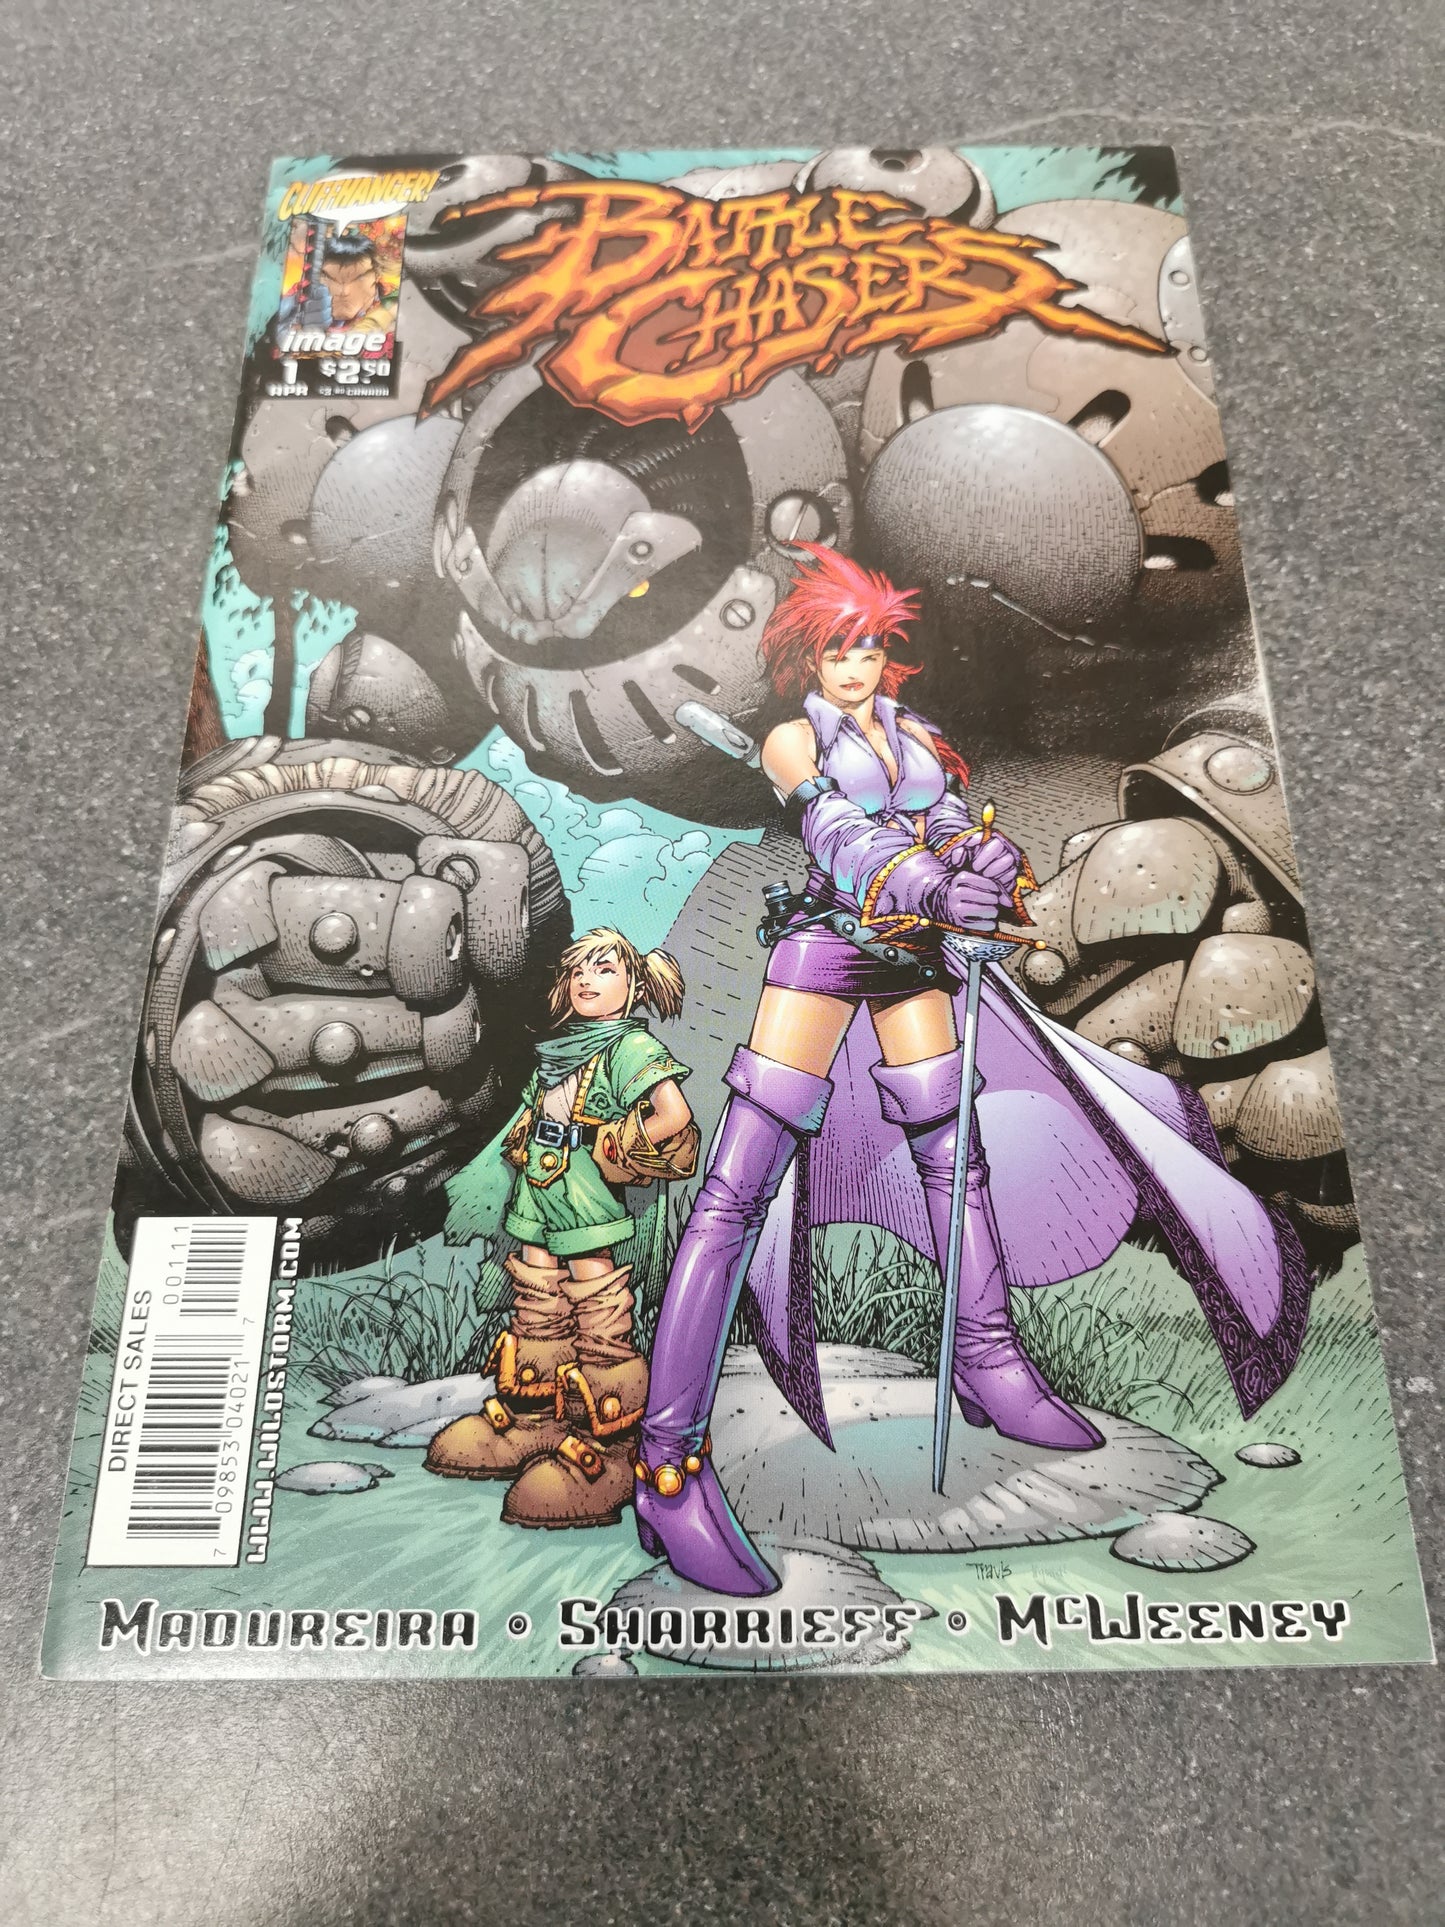 Battle Chasers #1 1998 Image comics